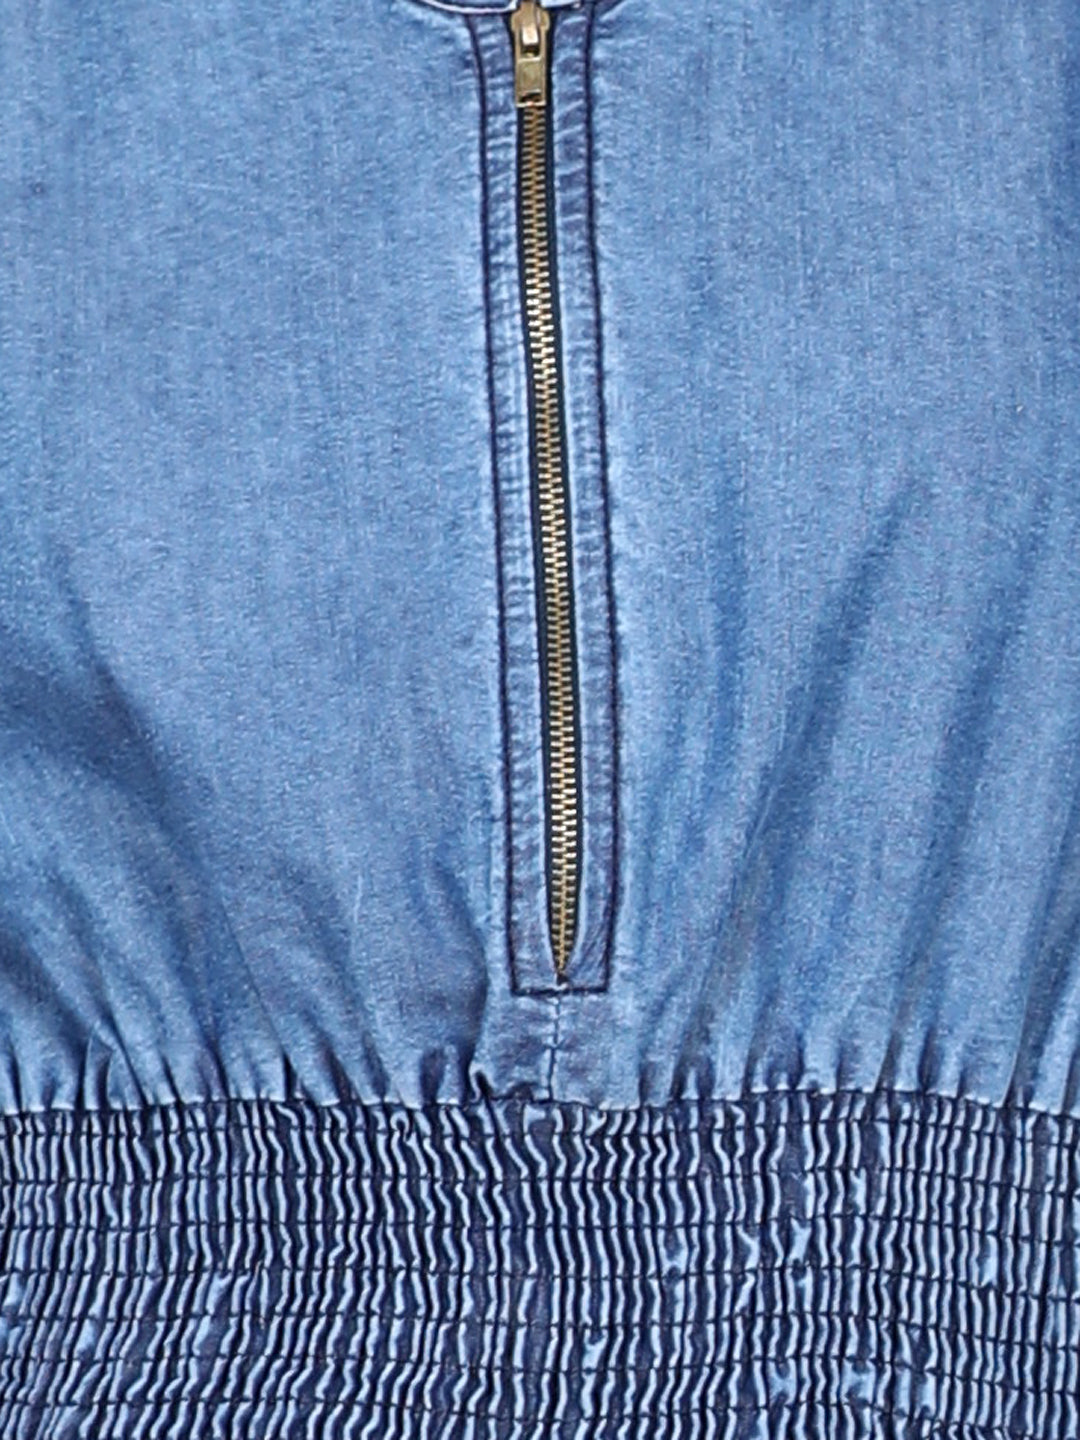 Girls Blue Denim Jumpsuit with front Zip